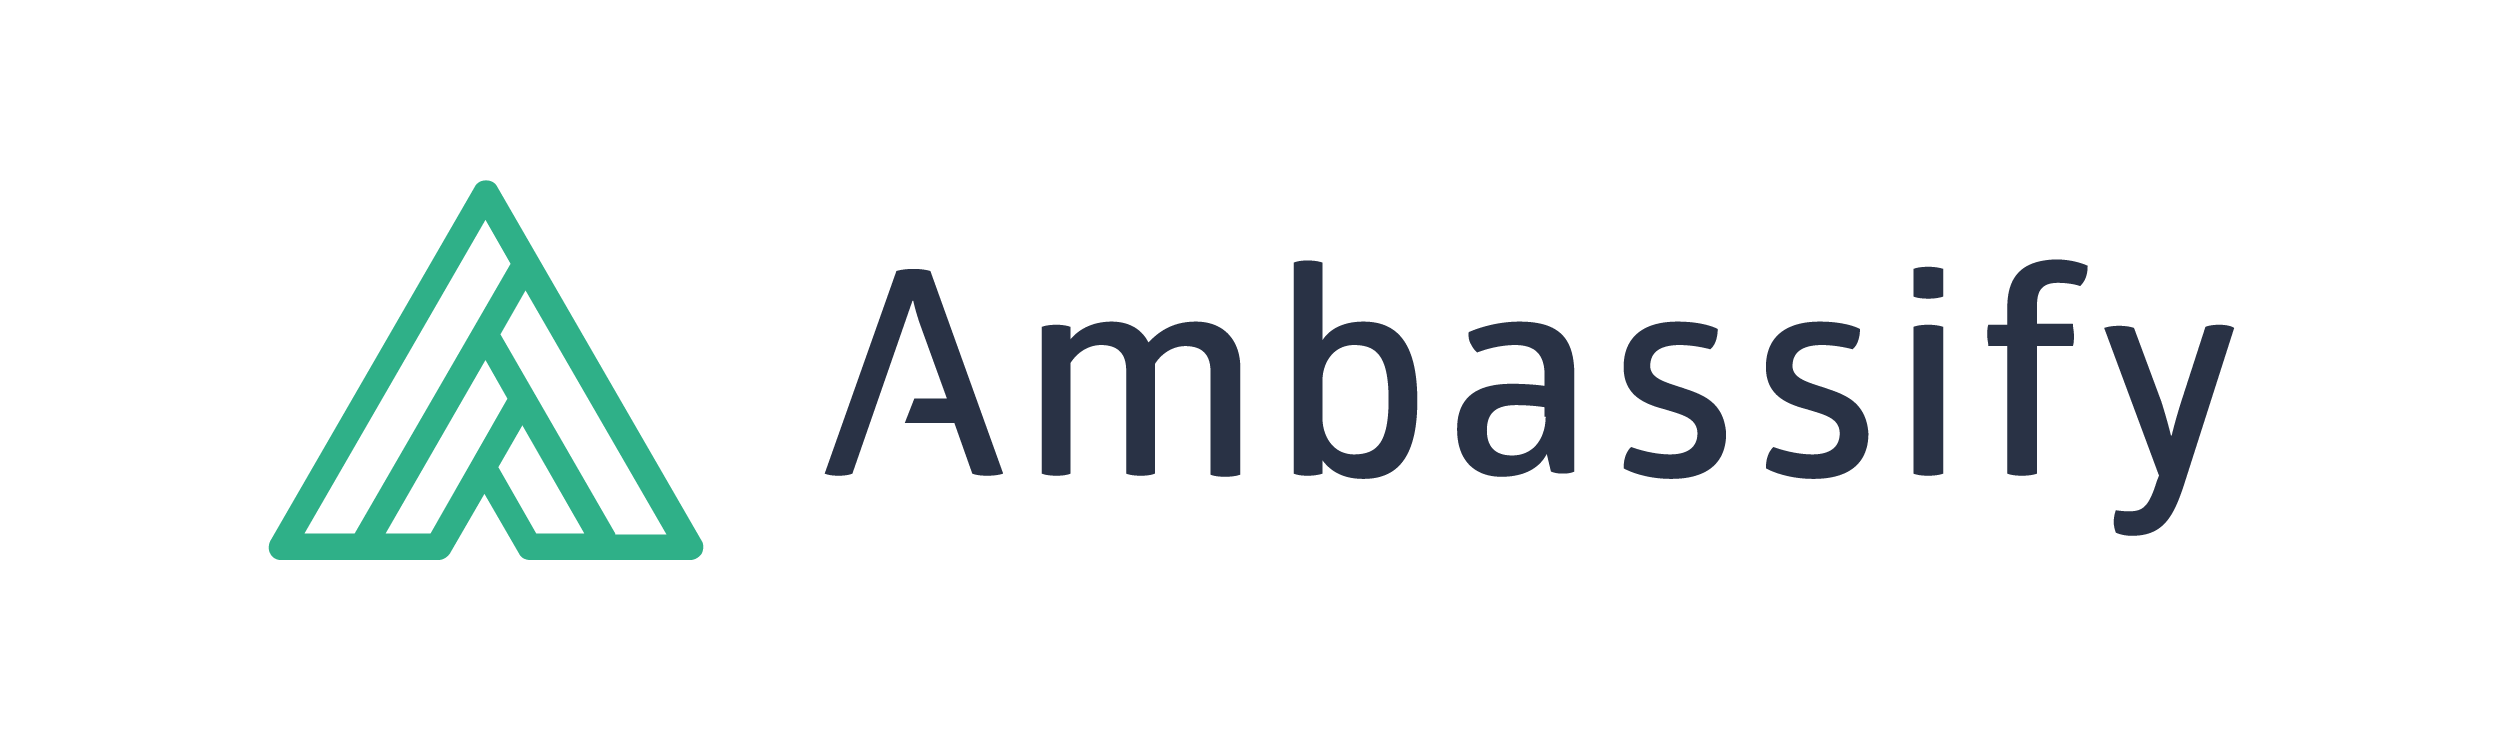 Ambassify logo